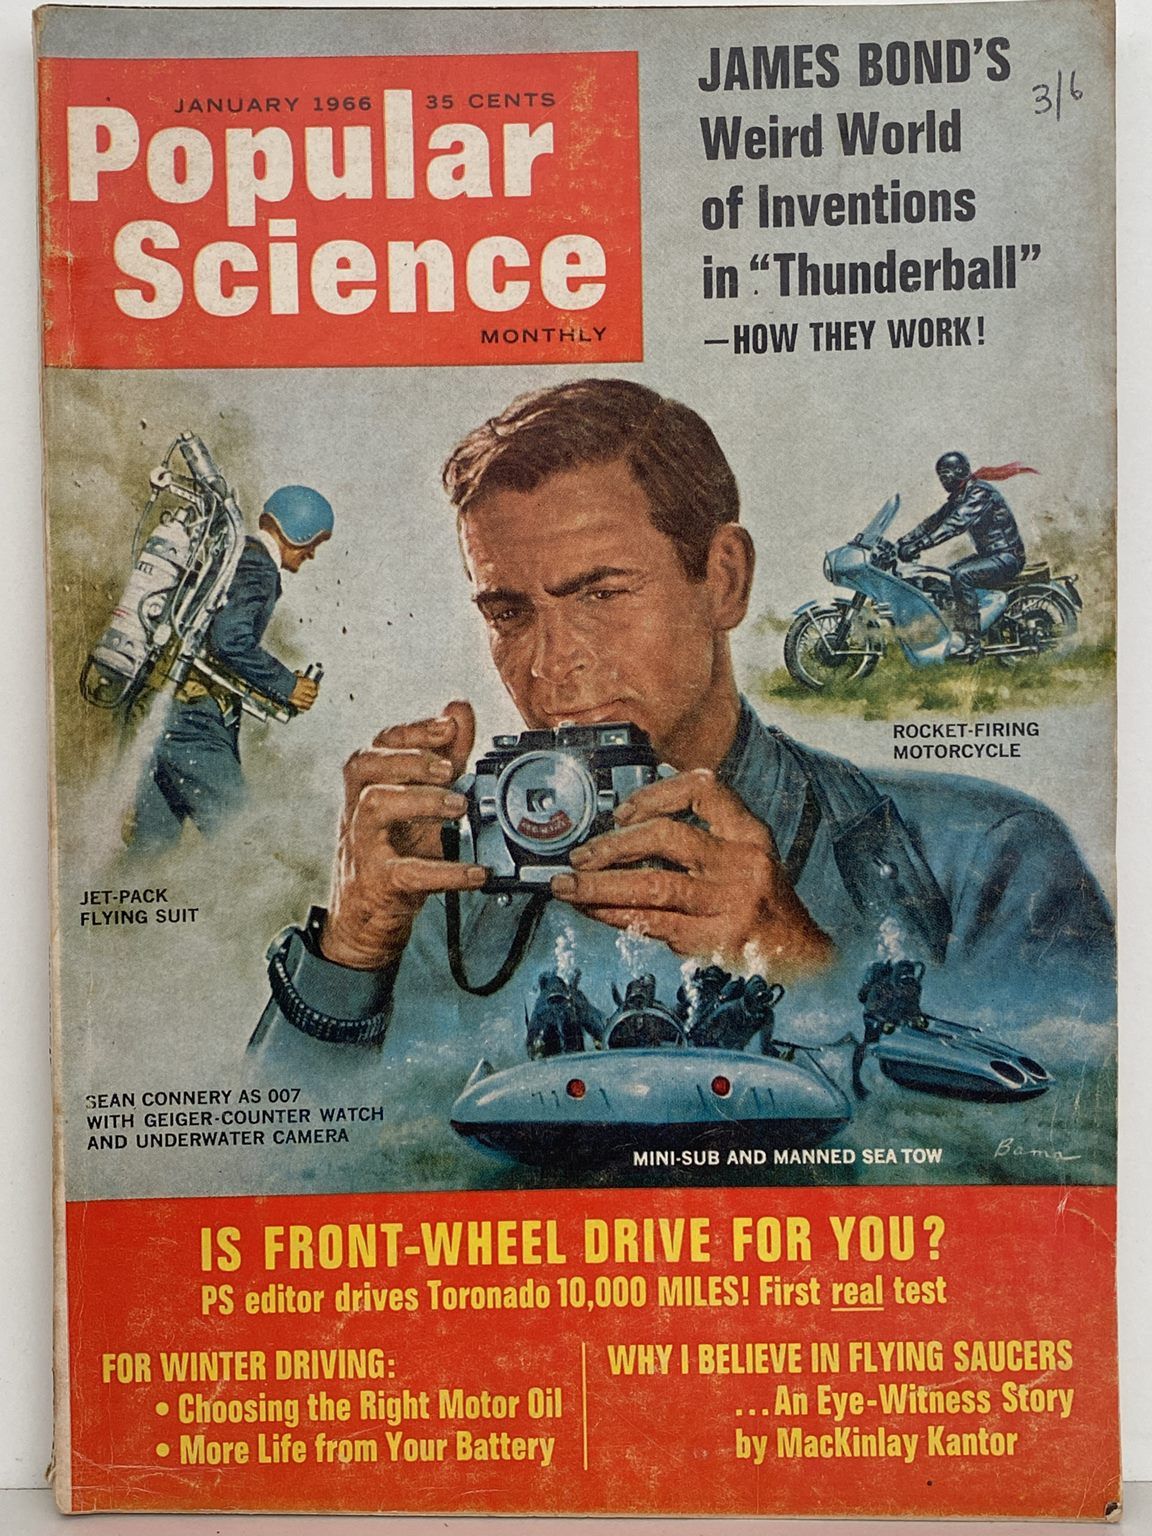 VINTAGE MAGAZINE: Popular Science - Vol. 188, No. 1 - January 1966